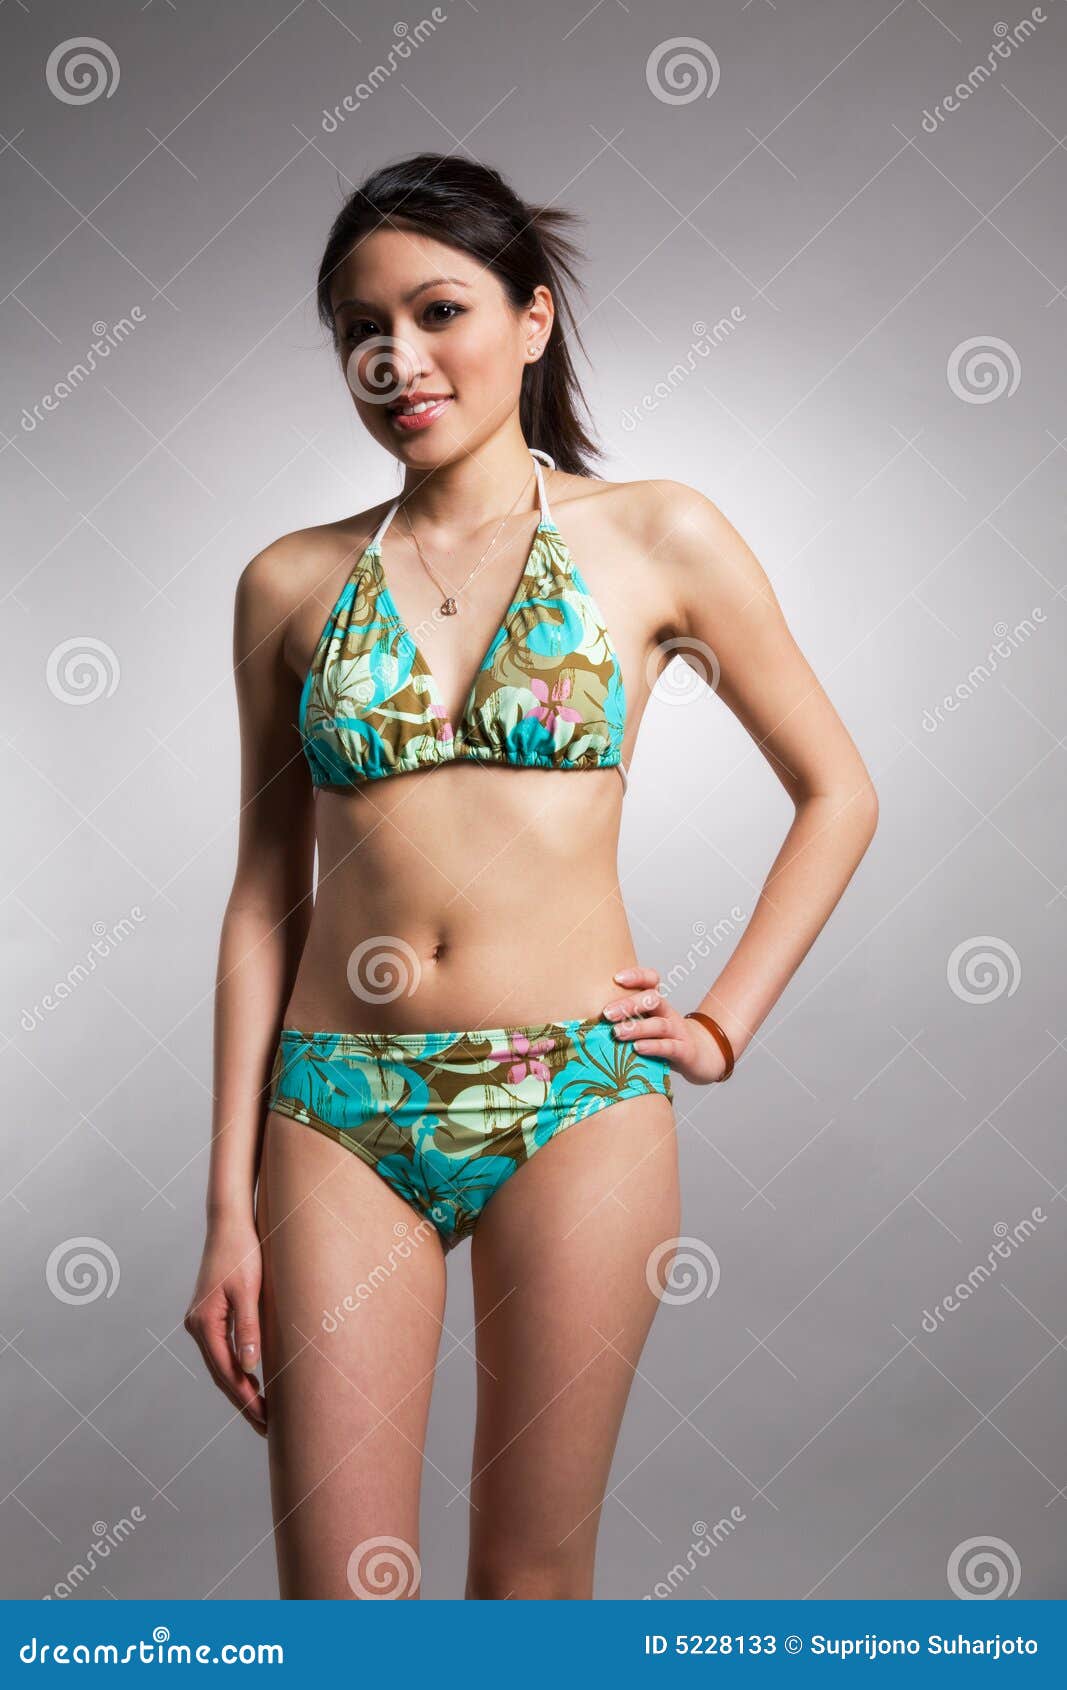 asian women in bikinis